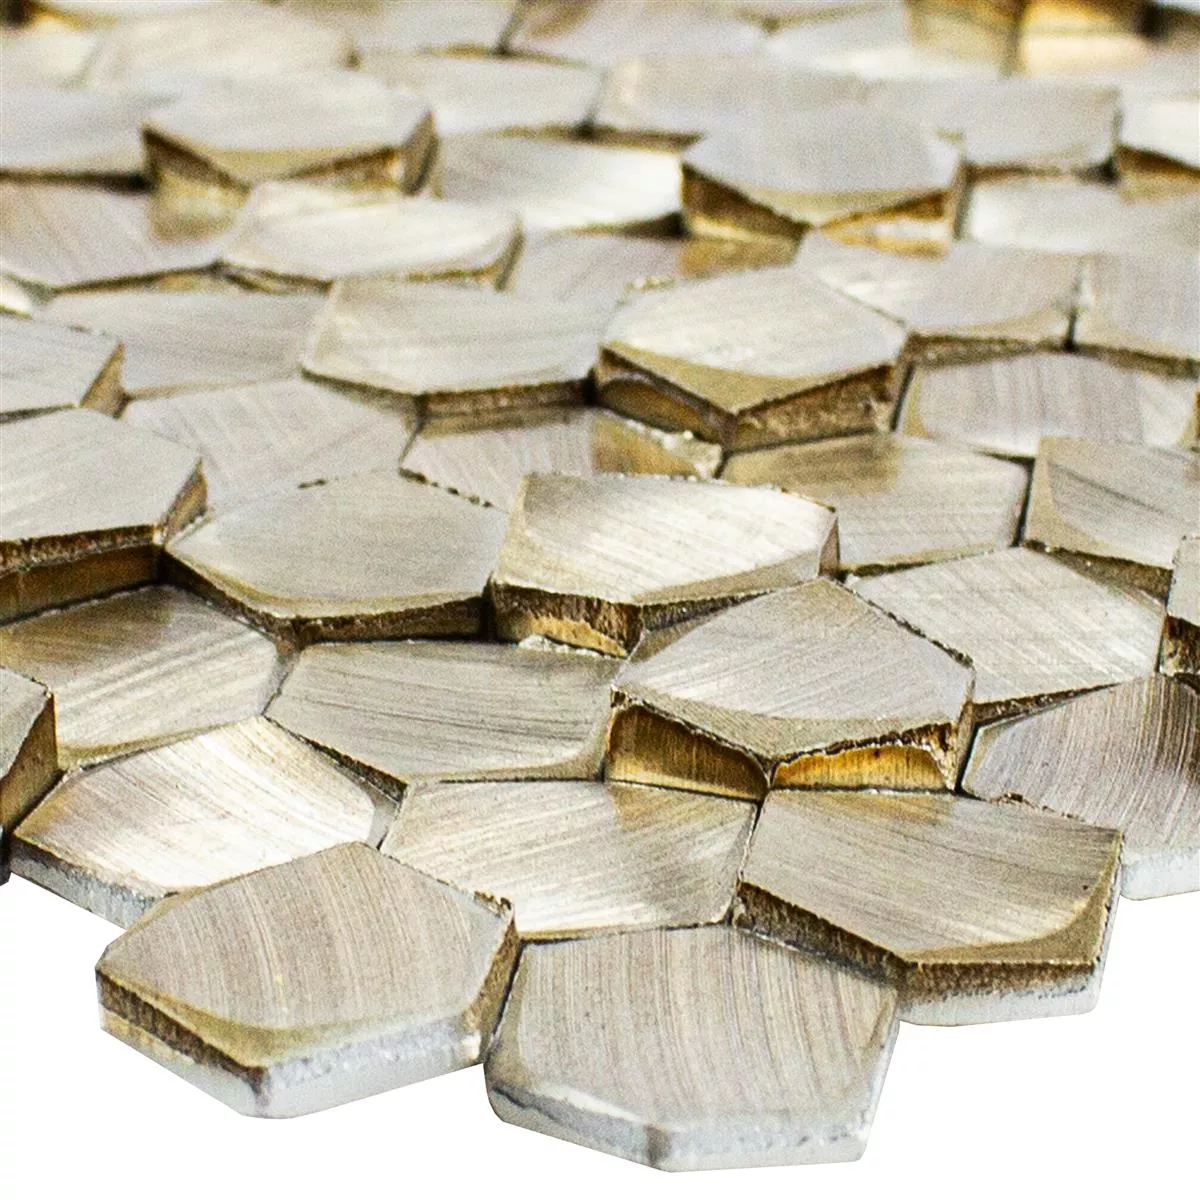 Sample Aluminium Metal Mosaic Tiles McAllen Gold